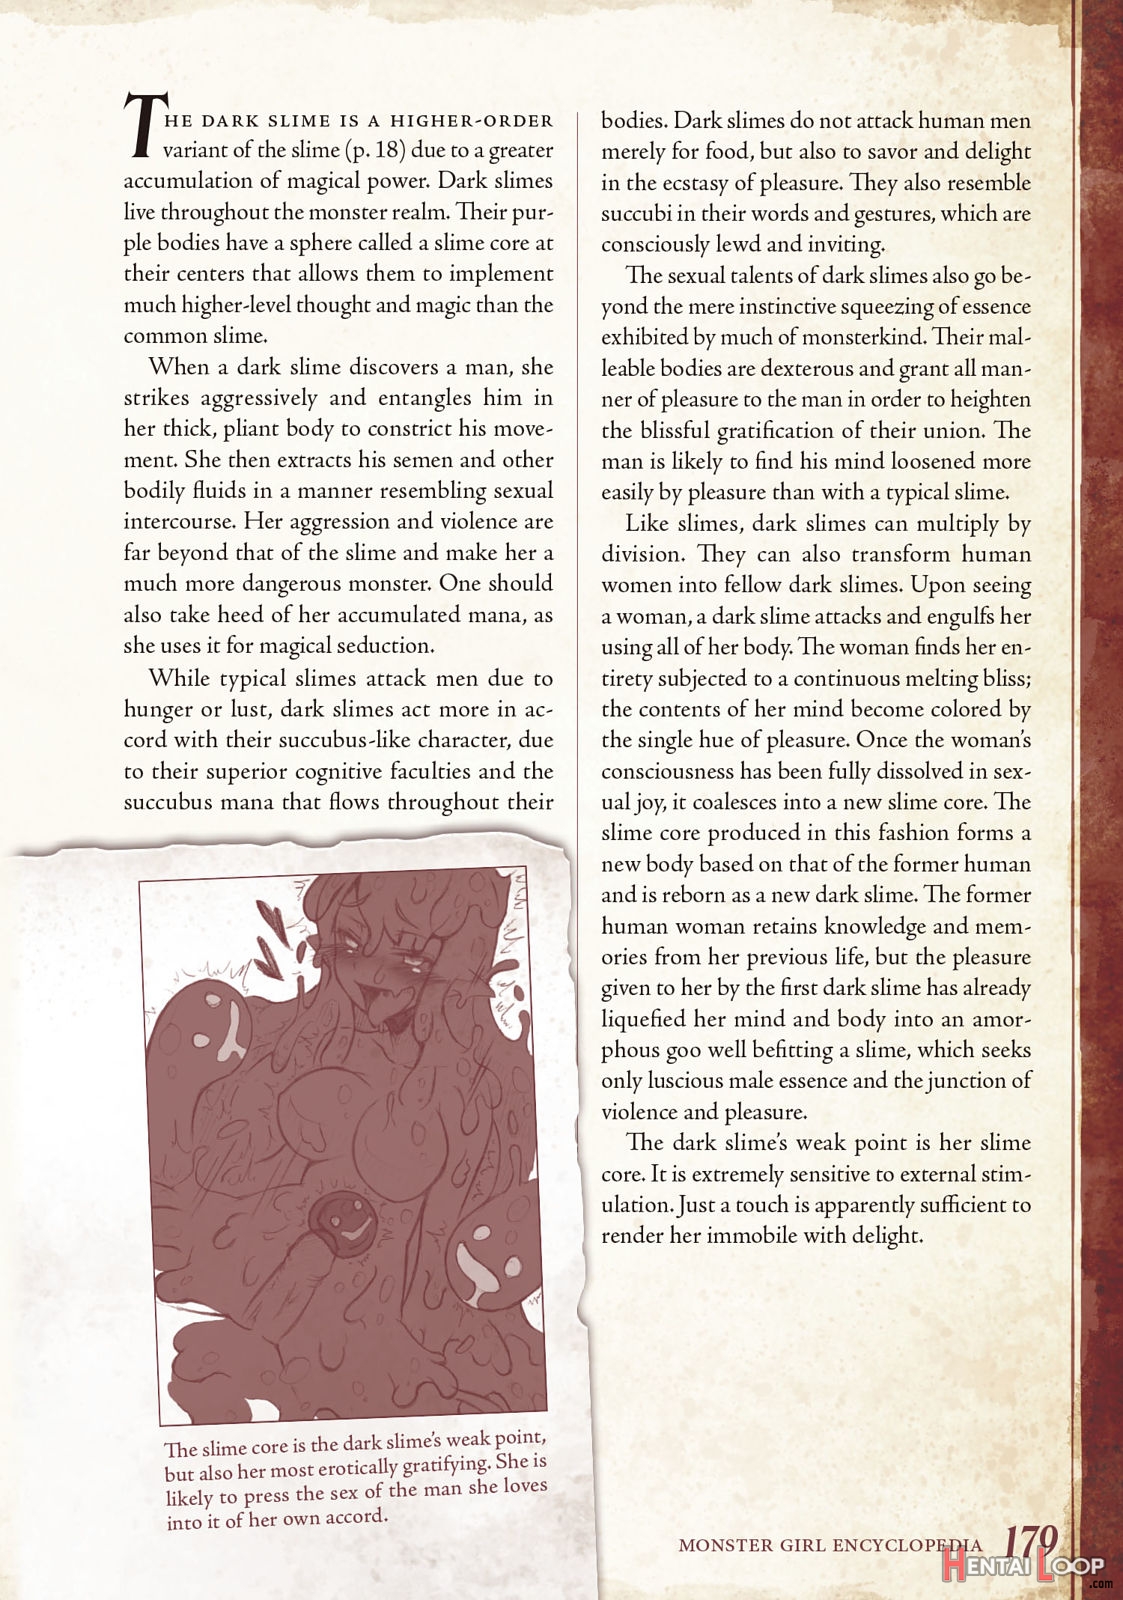 Monster Girl Encyclopedia Vol. 1 page 180